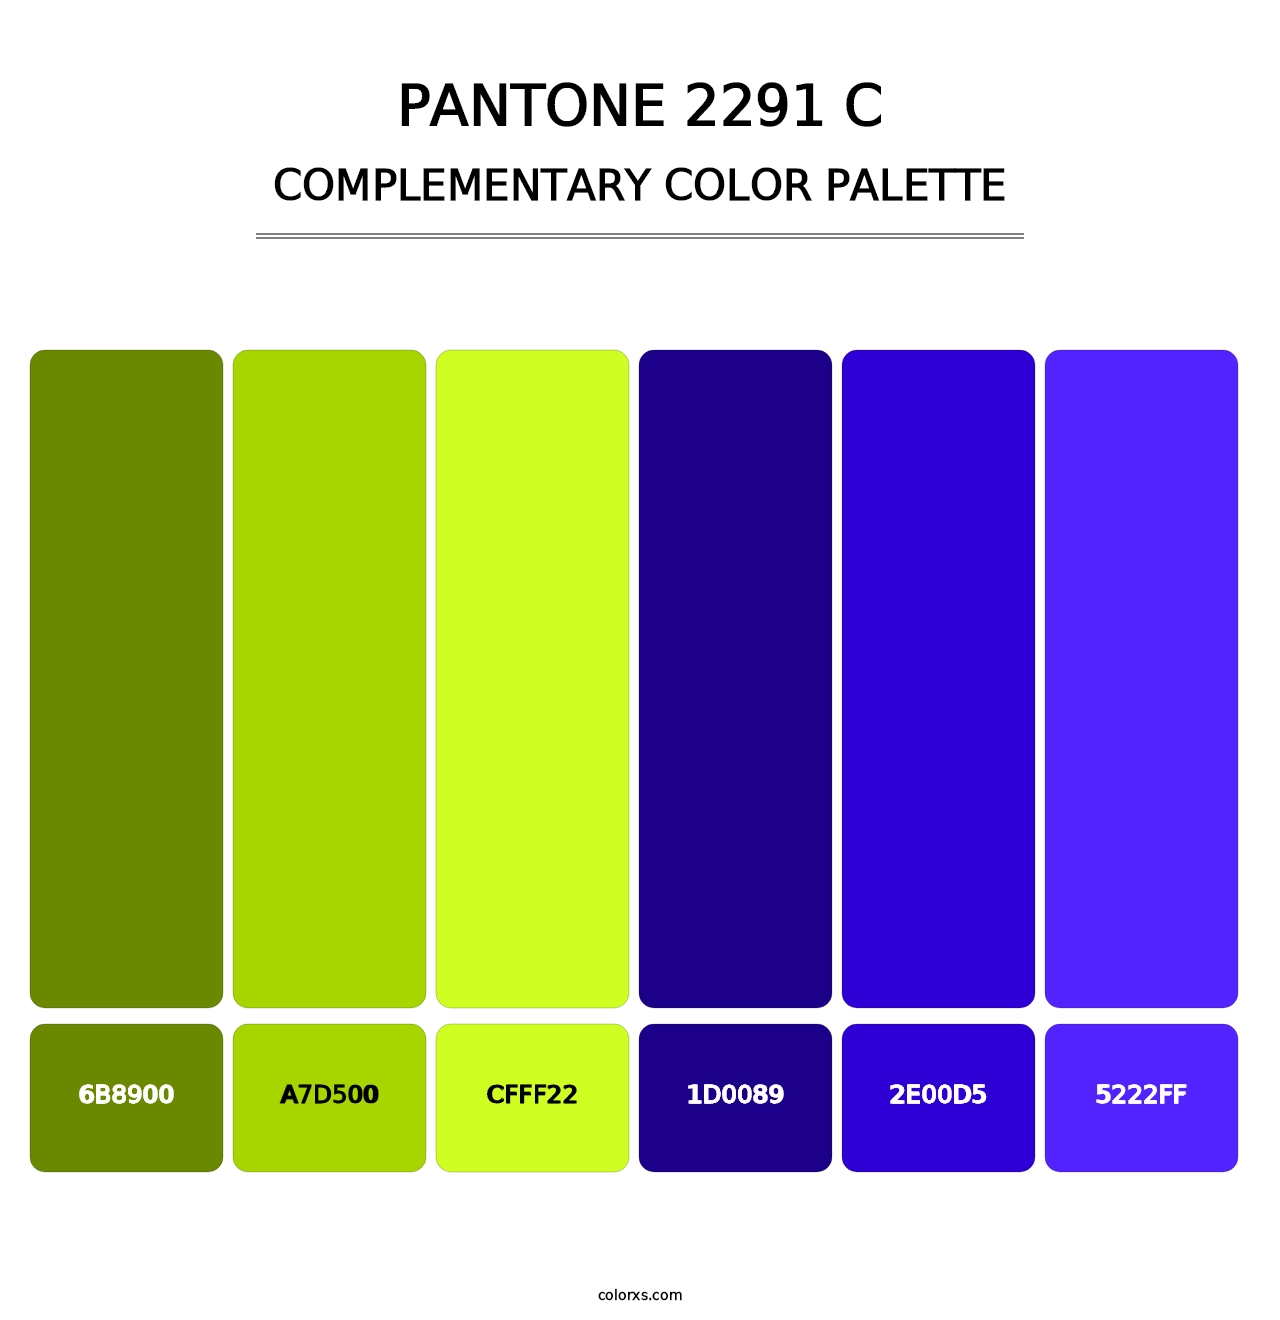 PANTONE 2291 C - Complementary Color Palette